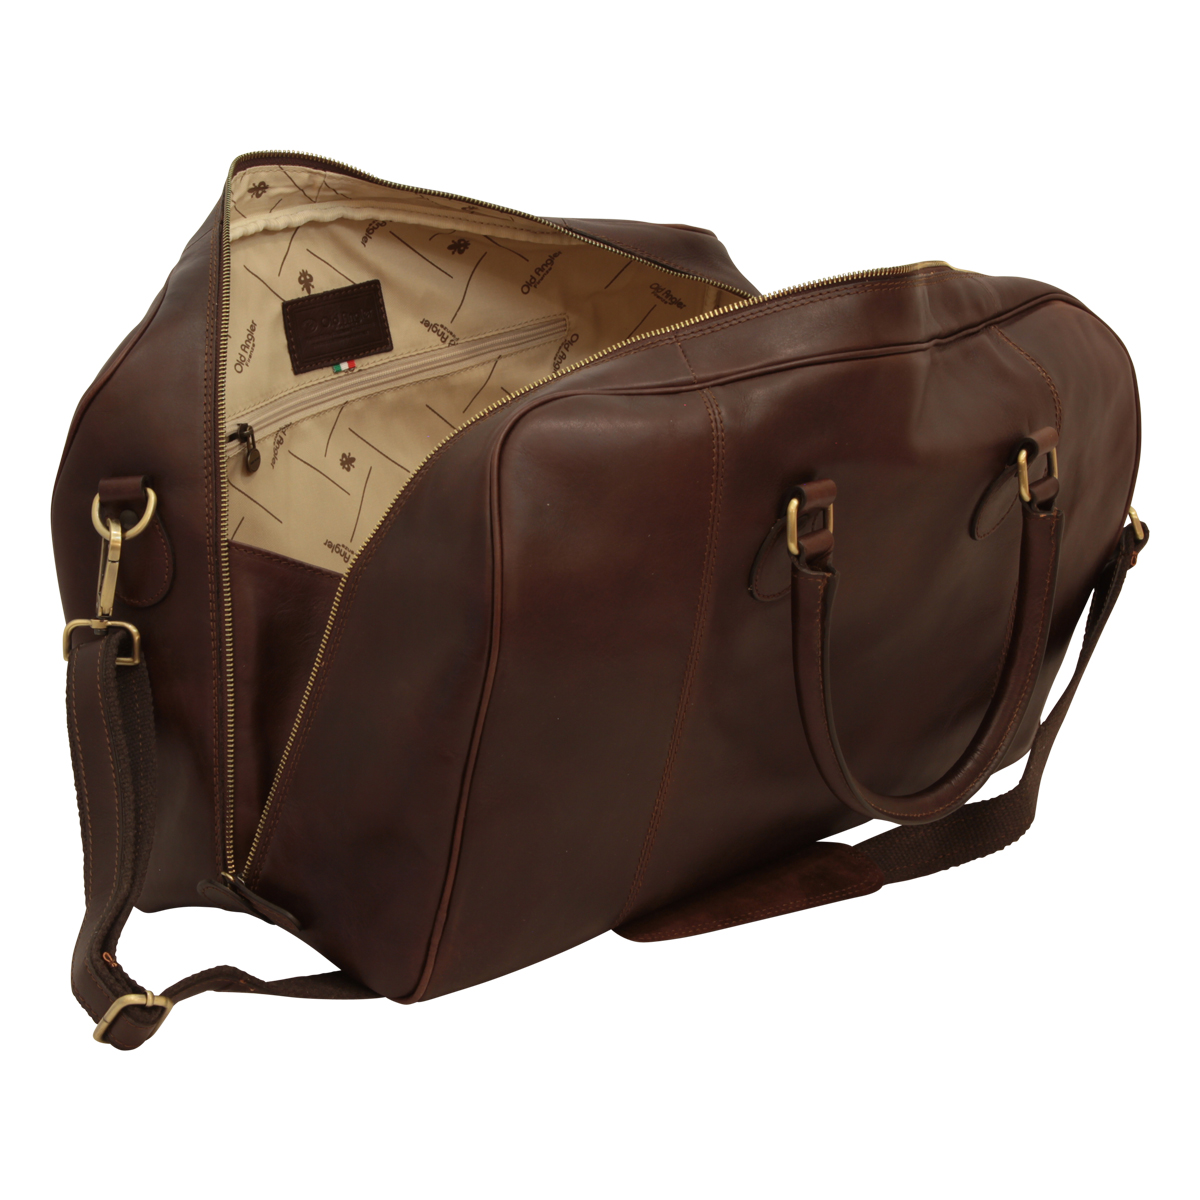 Leather Duffel Bag - Dark Brown | 404289TM US | Old Angler Firenze